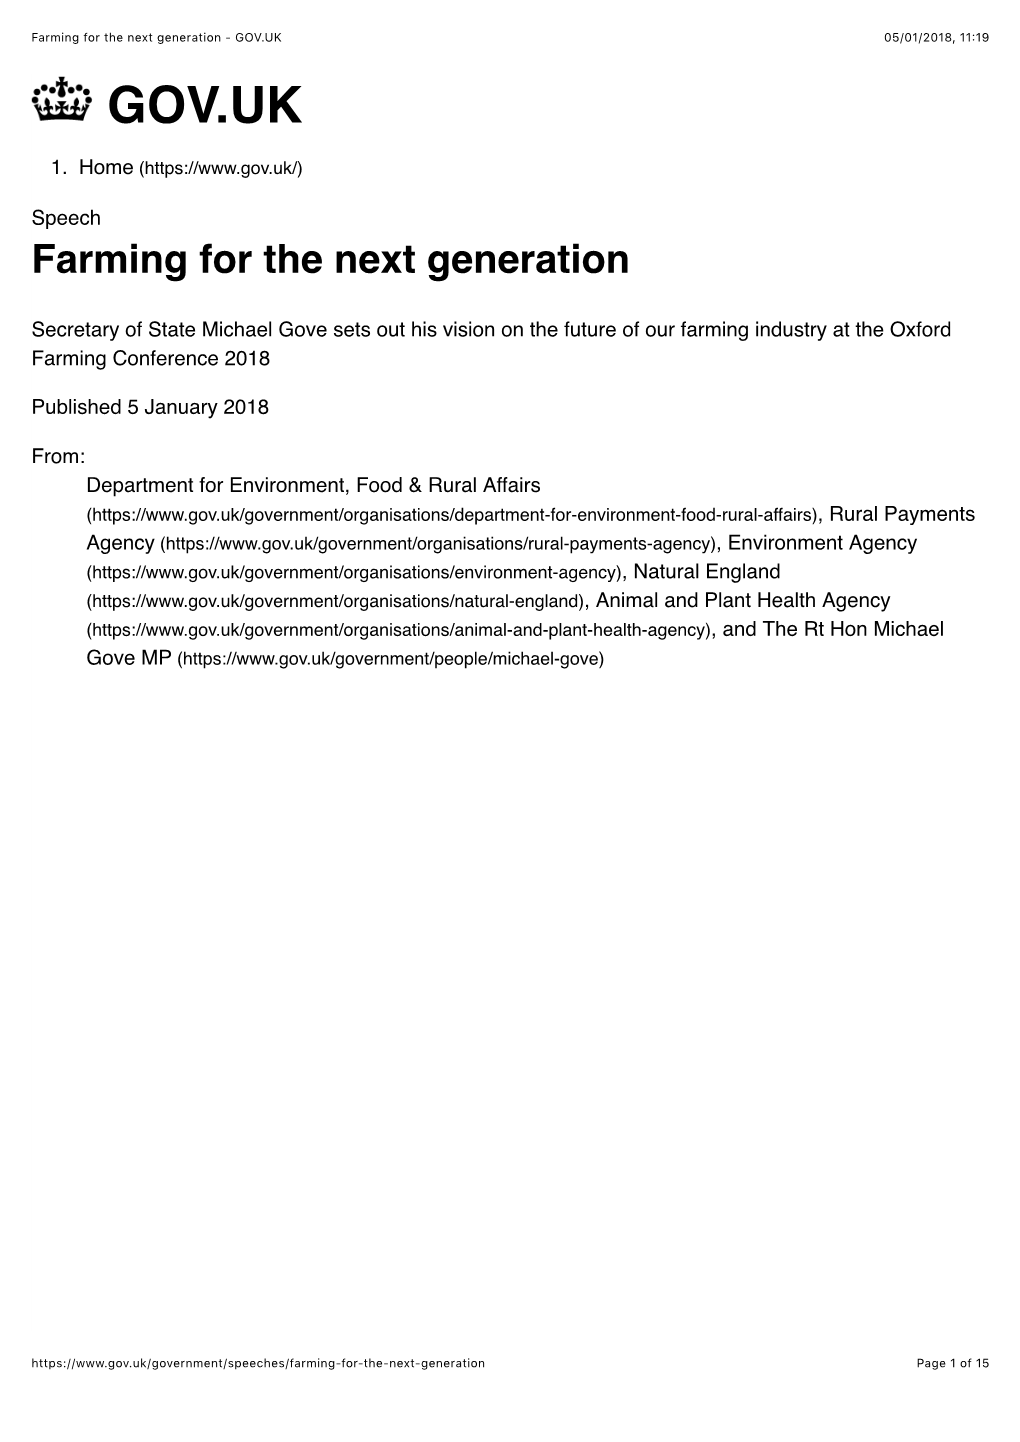 Farming for the Next Generation - GOV.UK 05/01/2018, 11:19 GOV.UK